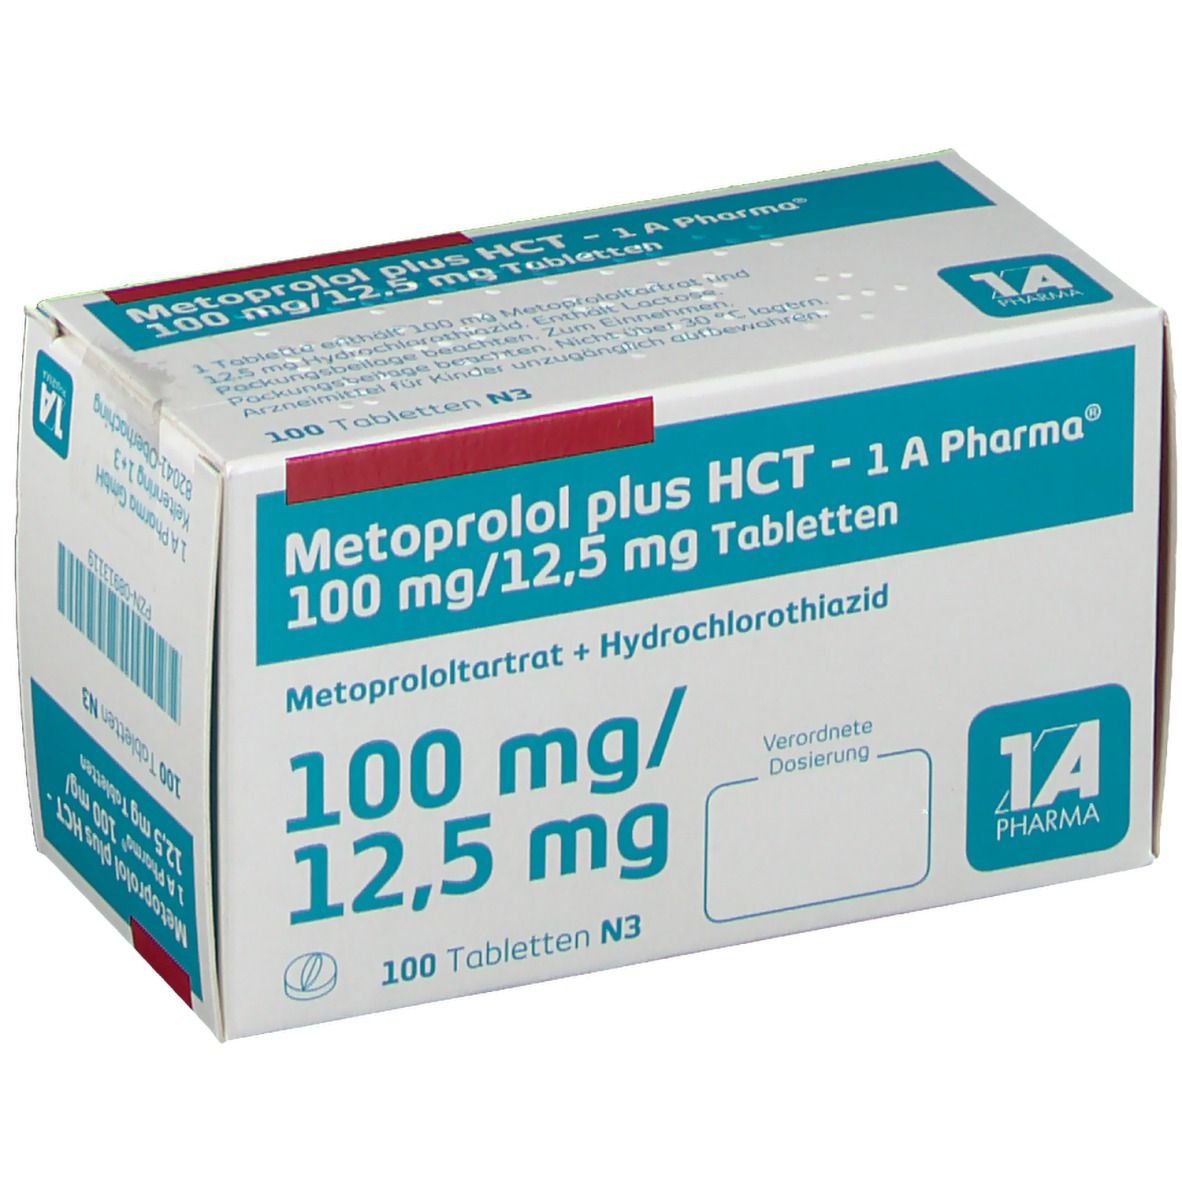 Metoprolol Plhct1A100/12.5